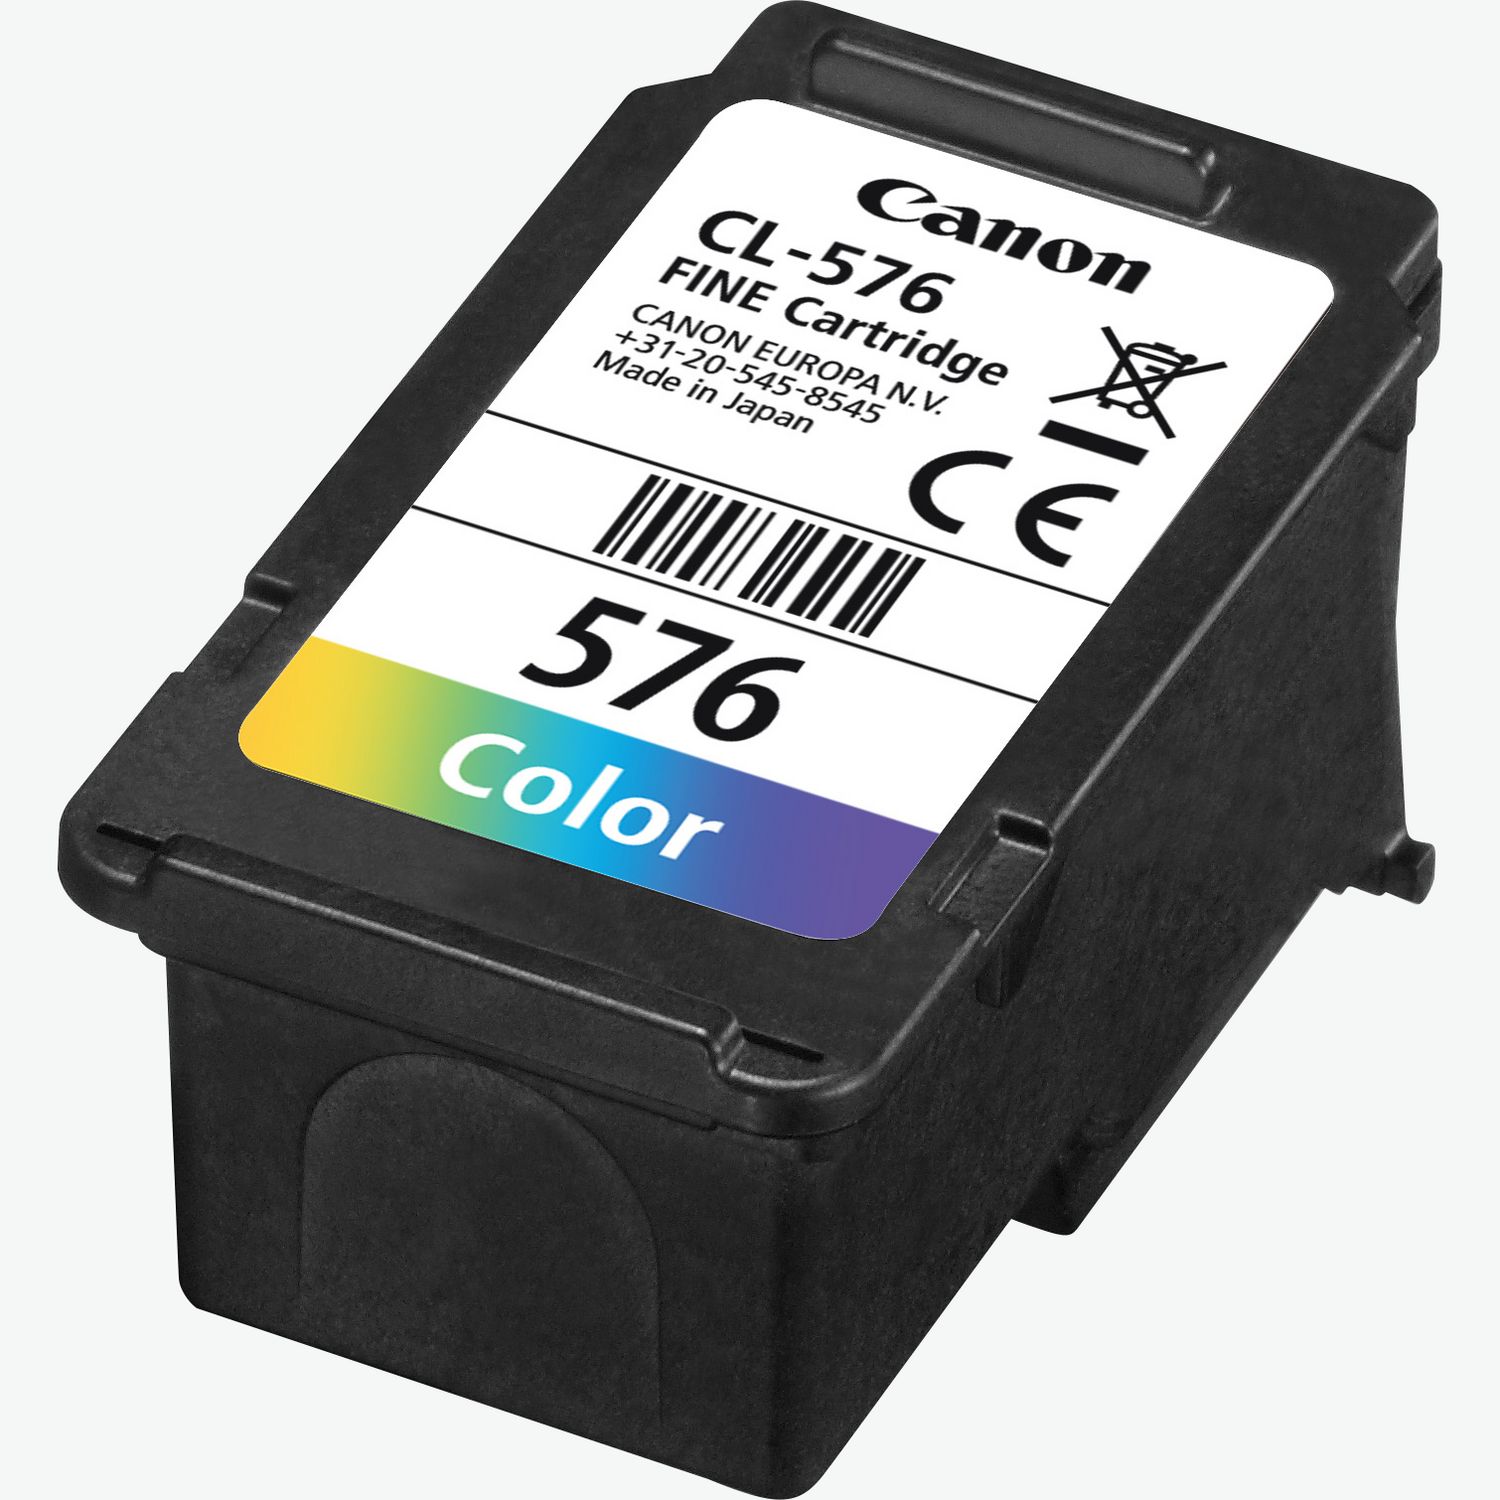 Canon PIXMA TS3550i Impresora Multifunción Color WiFi